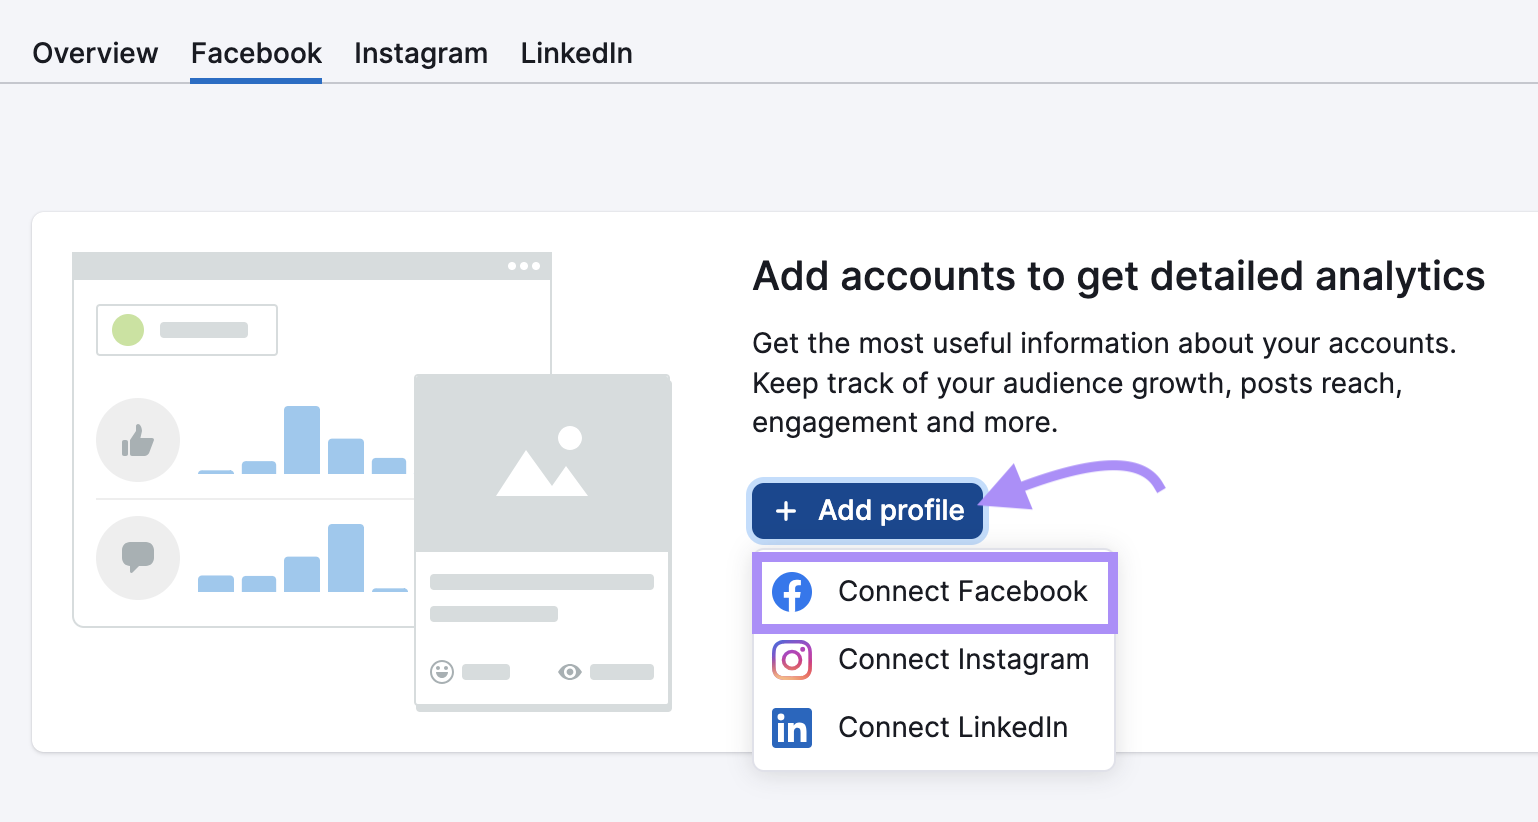 Connect Facebook to Social Analytics